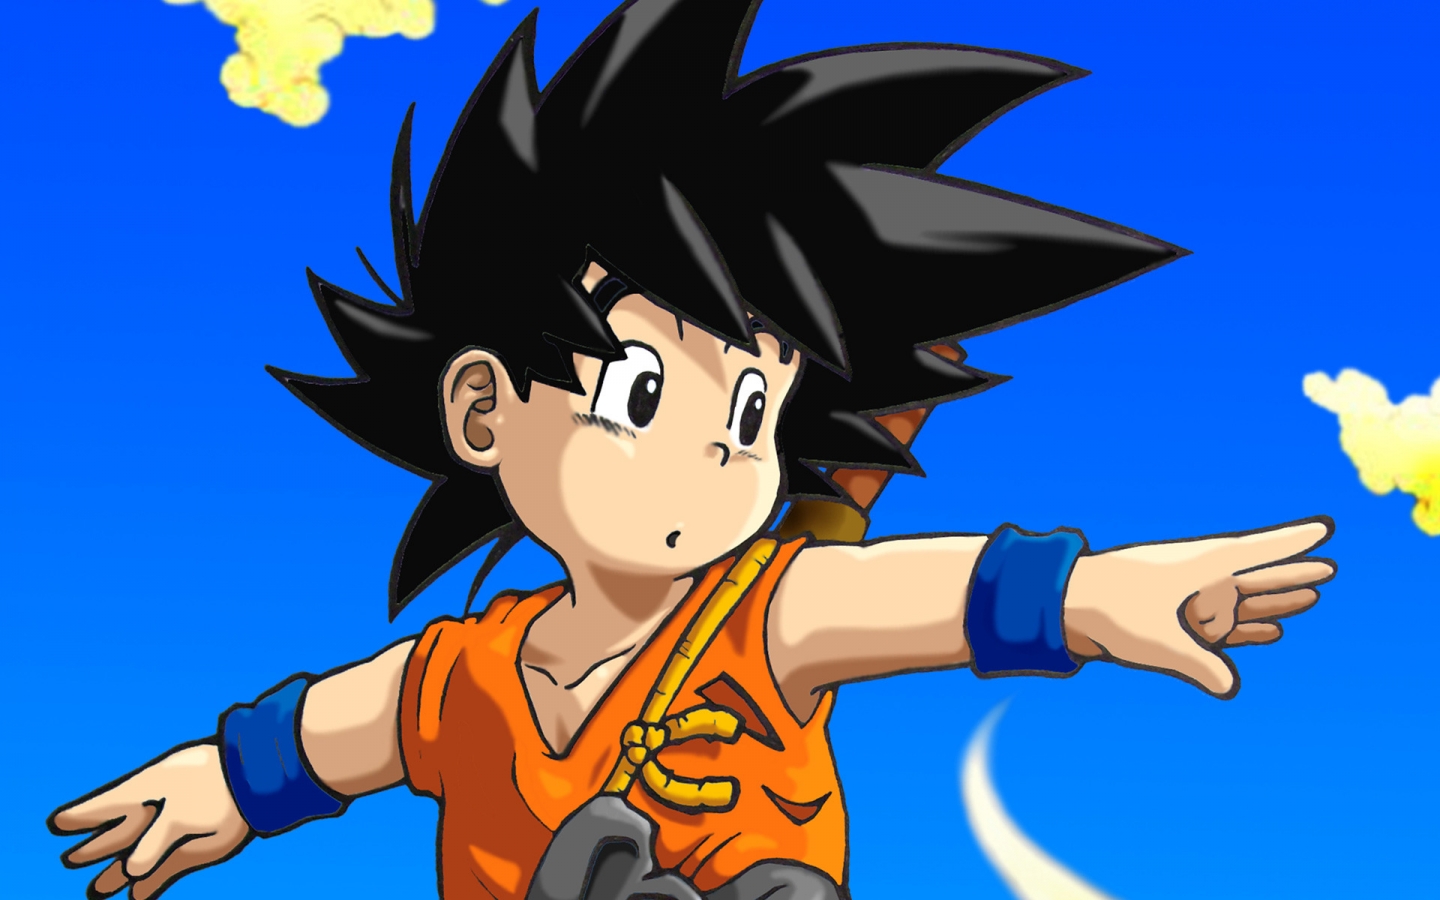 Son Goku for 1440 x 900 widescreen resolution